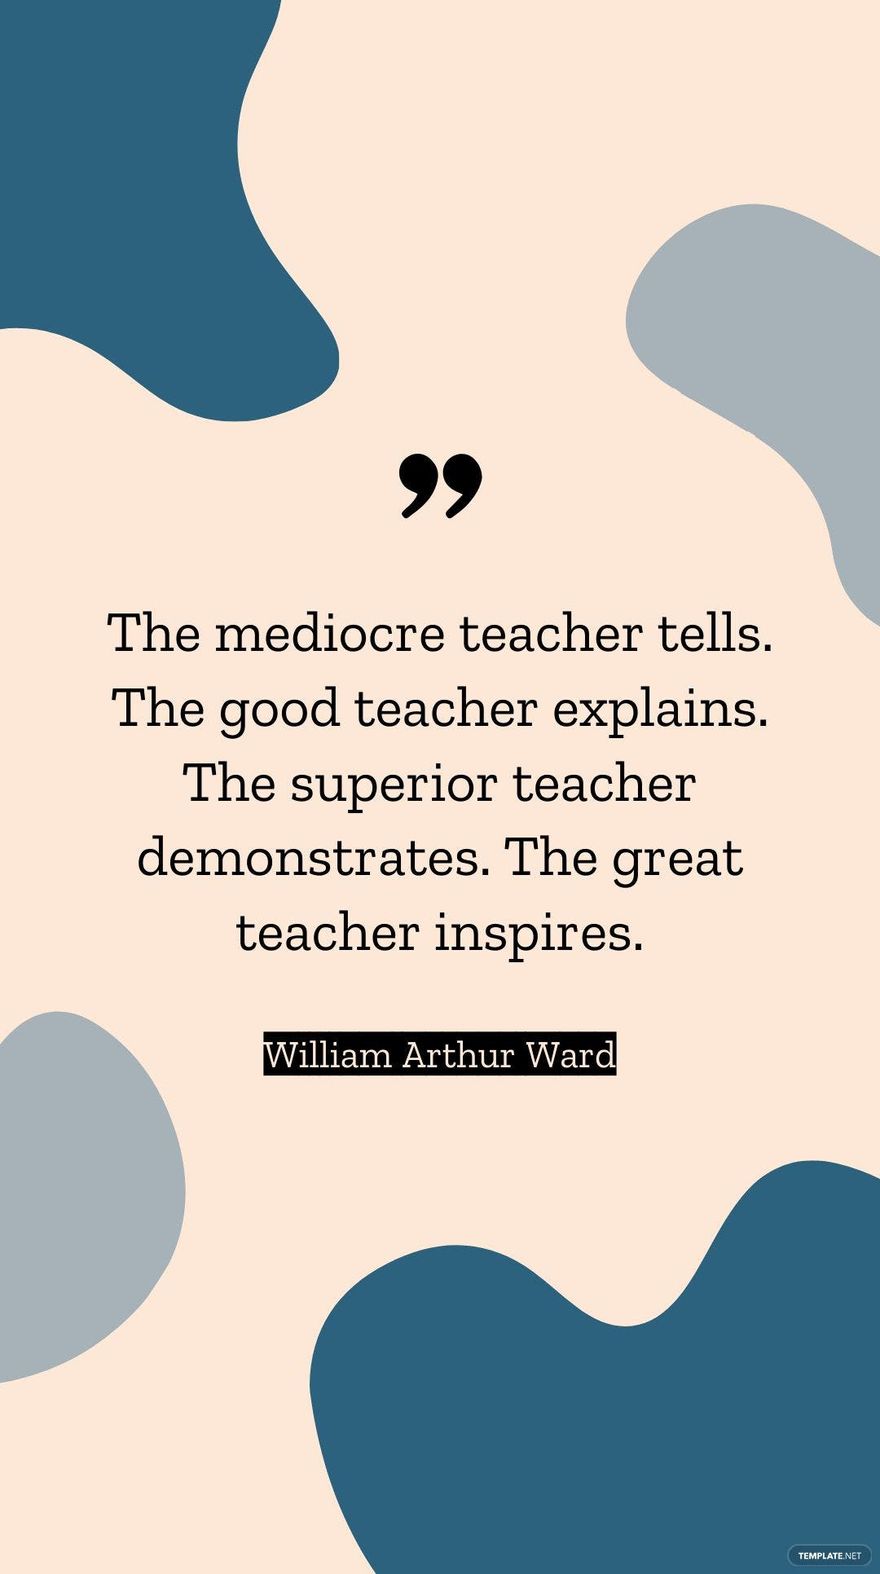 William Arthur Ward - The mediocre teacher tells. The good teacher explains. The superior teacher demonstrates. The great teacher inspires.